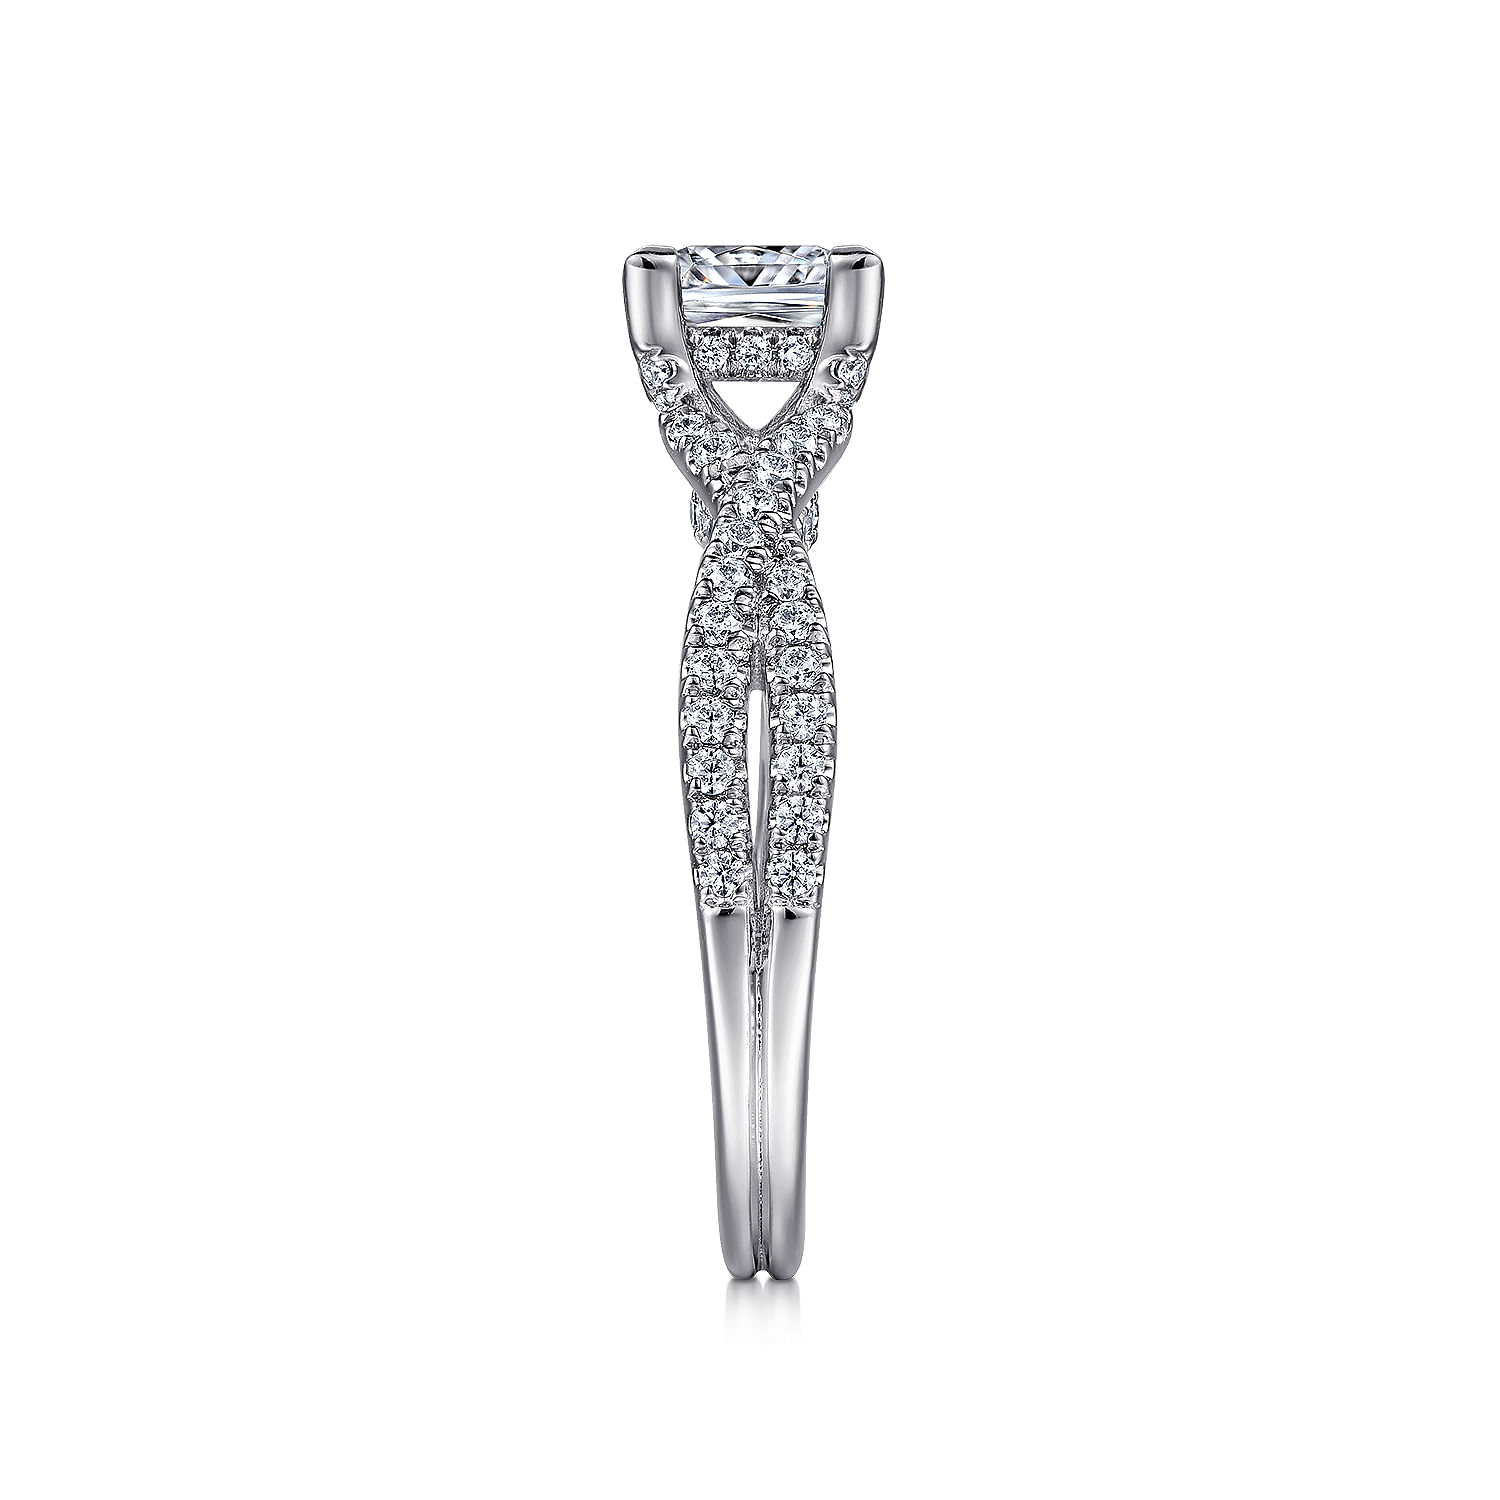 14K White Gold Twisted  Princess Cut Diamond Engagement Ring